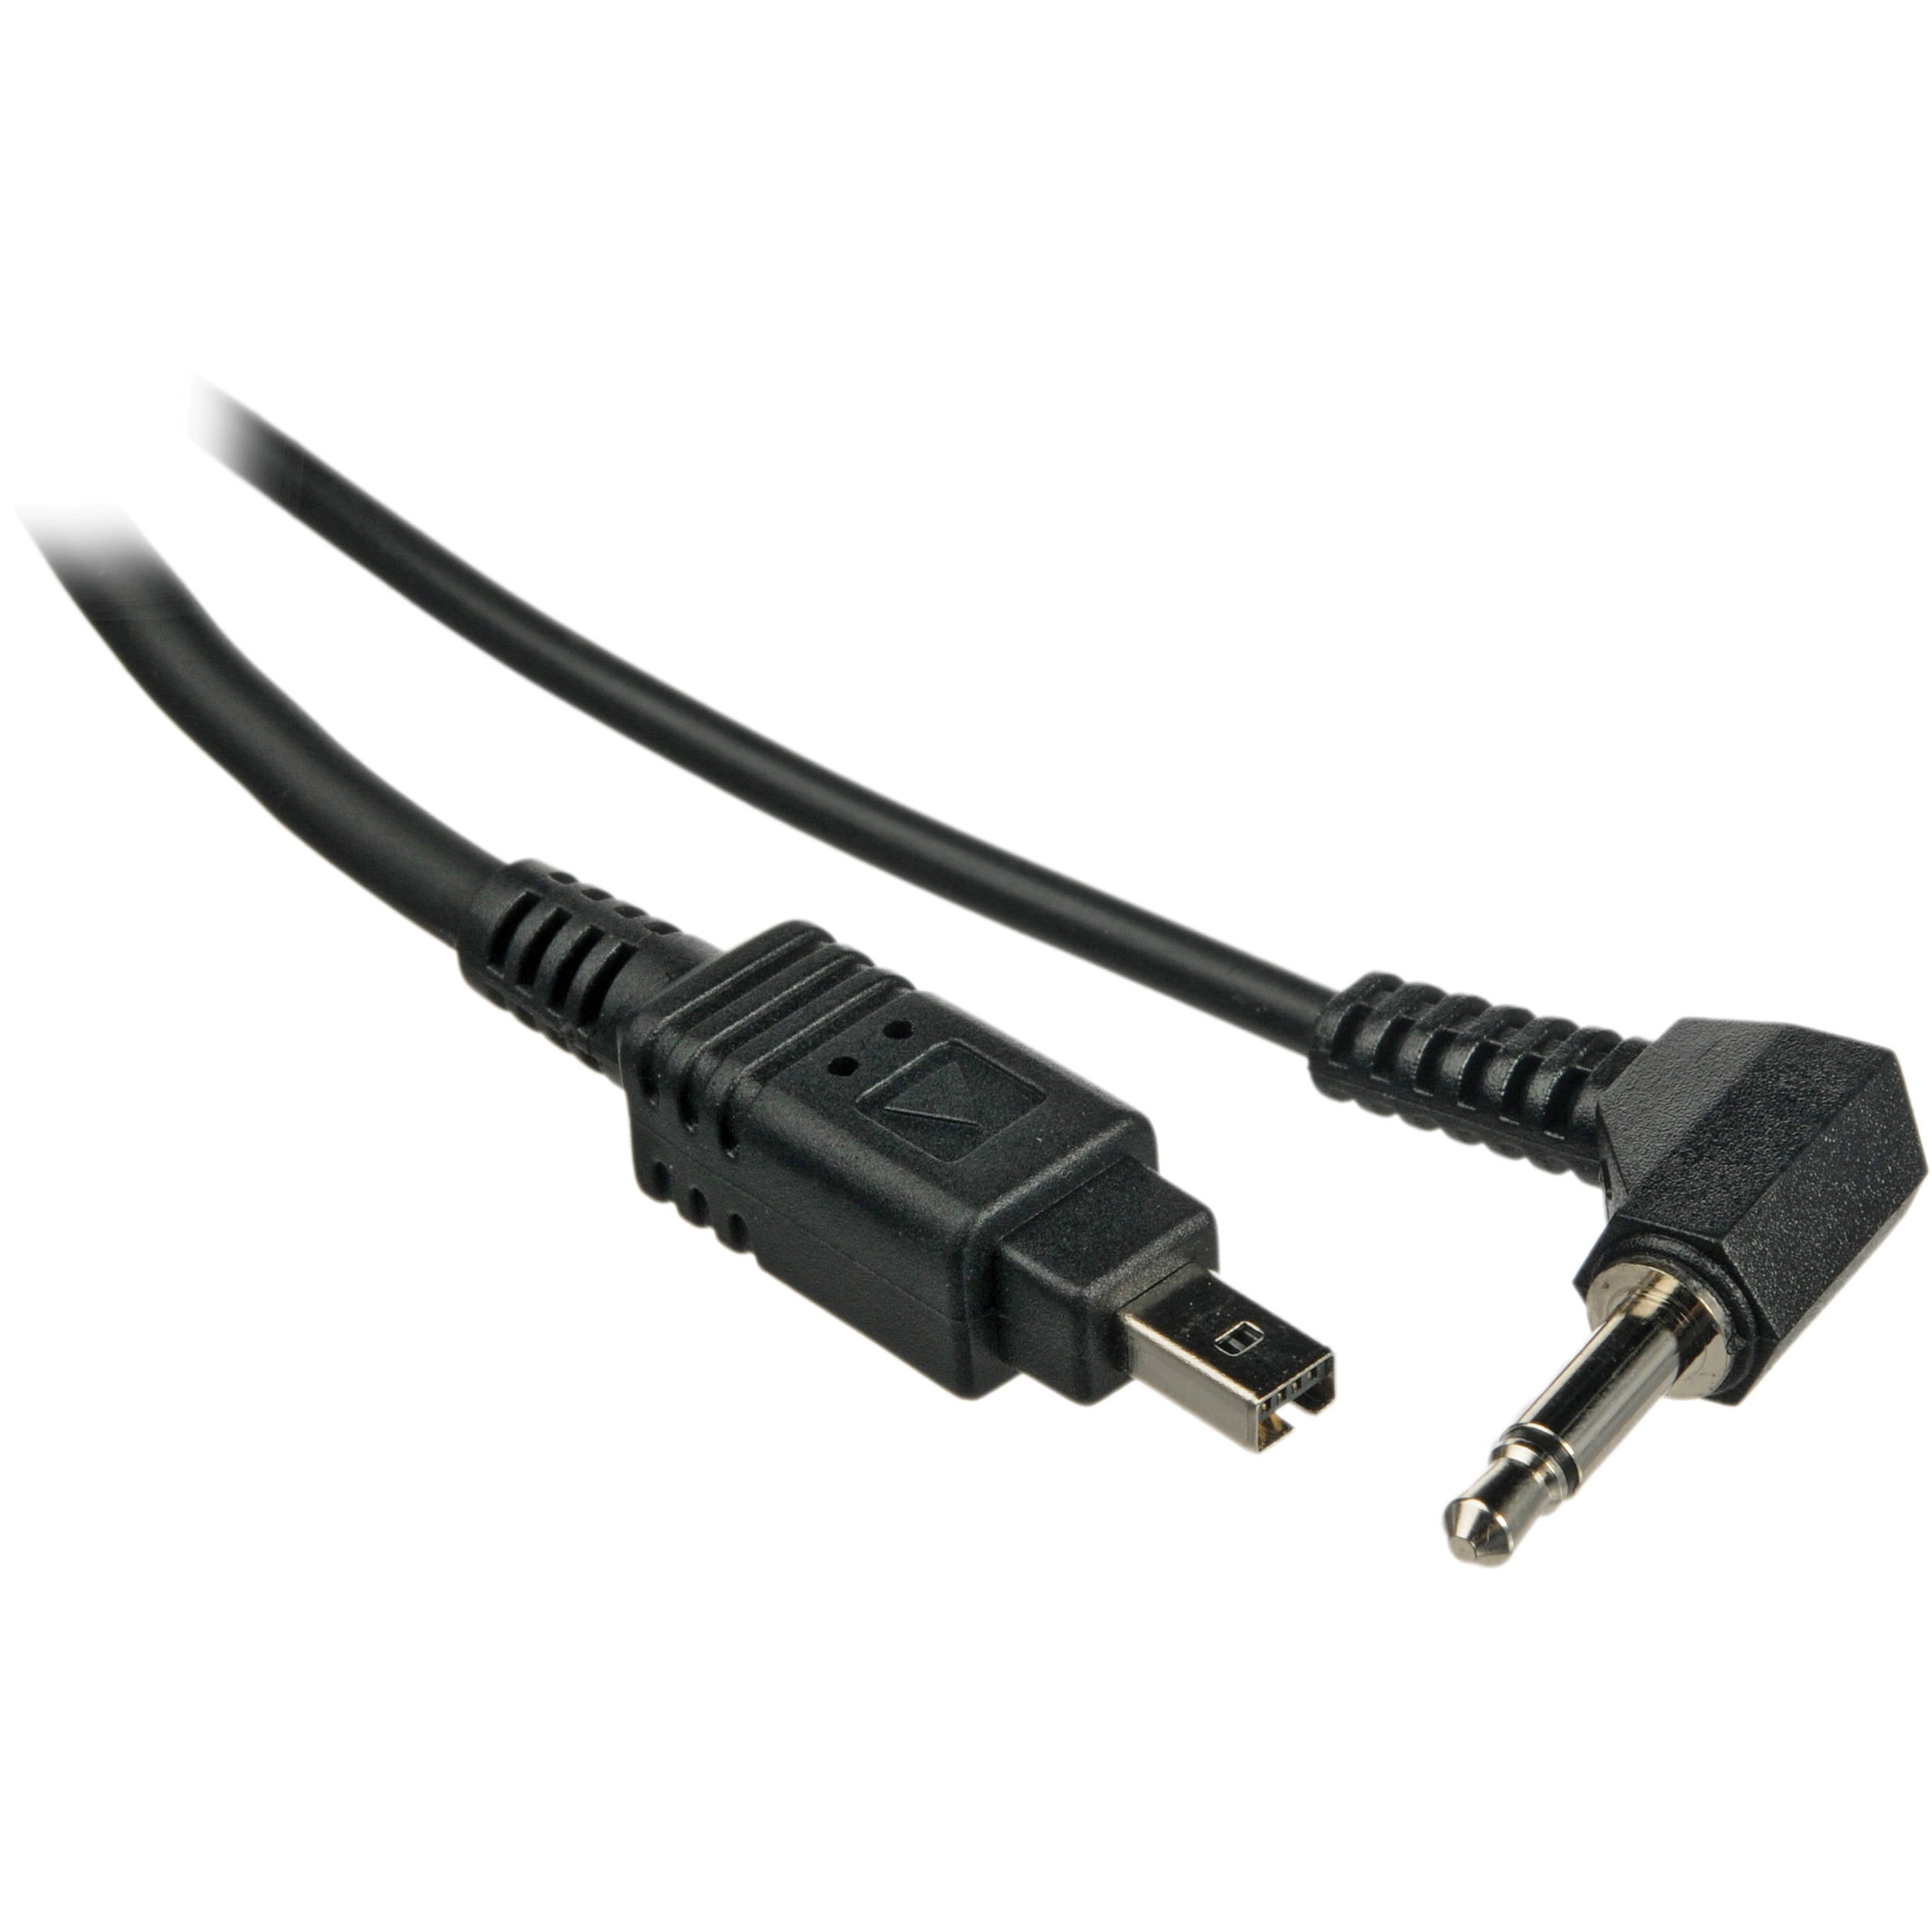 PocketWizard 804-500 NM4 4-Pin Motor Drive Cable (Black)